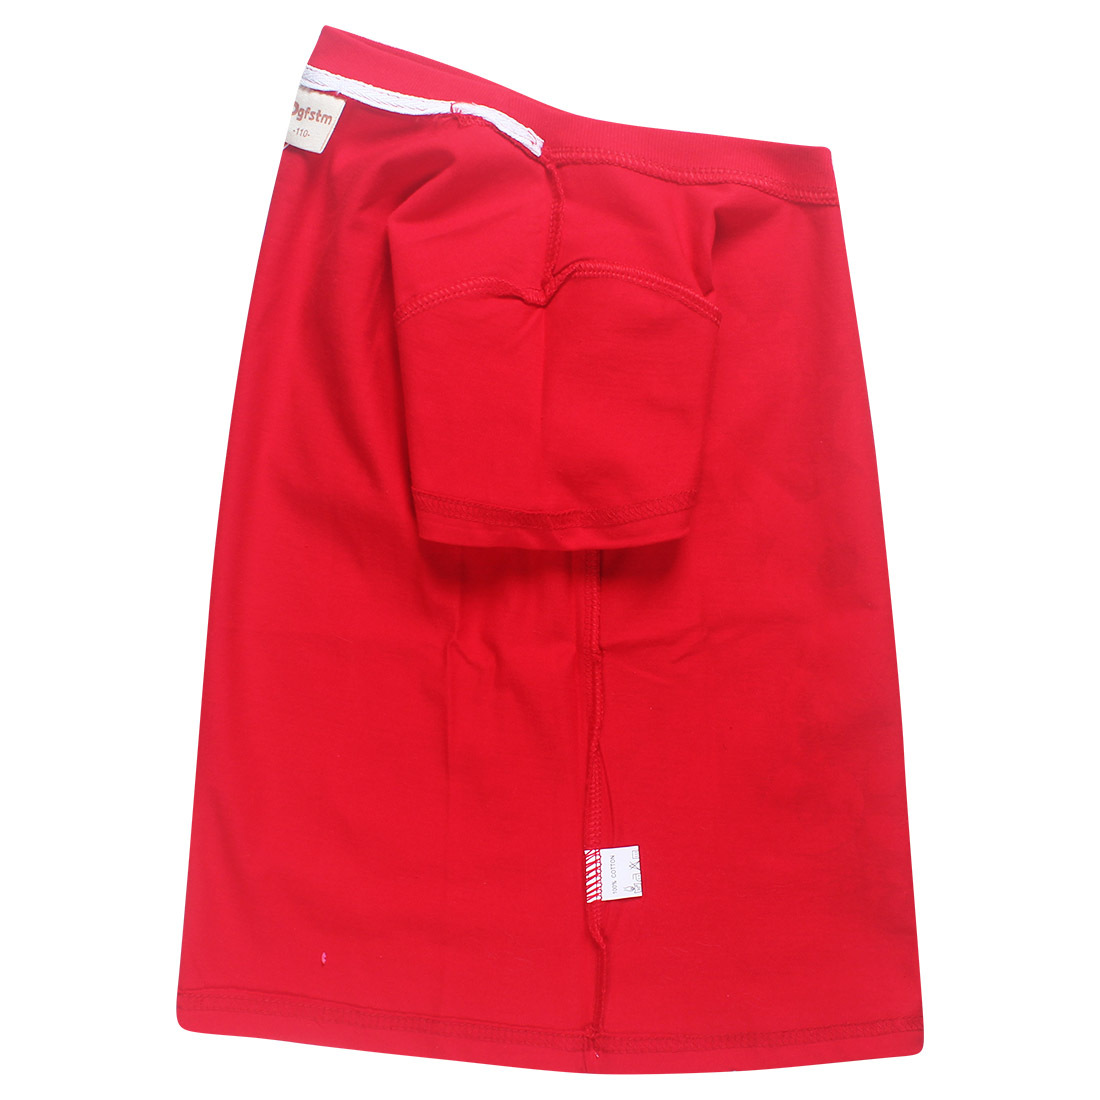 Roblox T Shirts For Kids Eyegemix Com - clothes roblox red dress